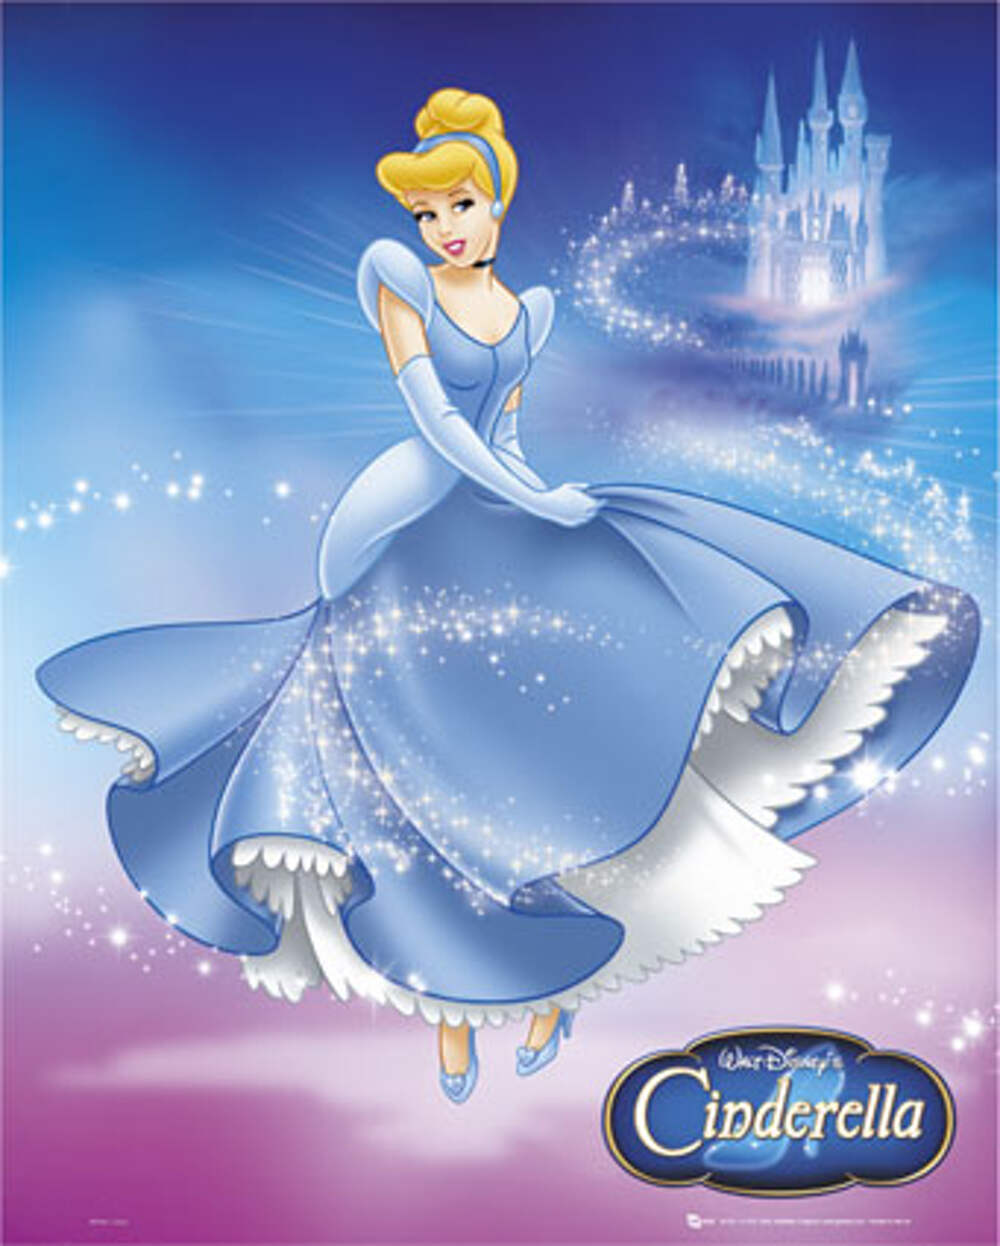 Cinderella am. Золушка Уолт Дисней. Принцесса Золушка. Золушка персонажи. Золушка плакат.